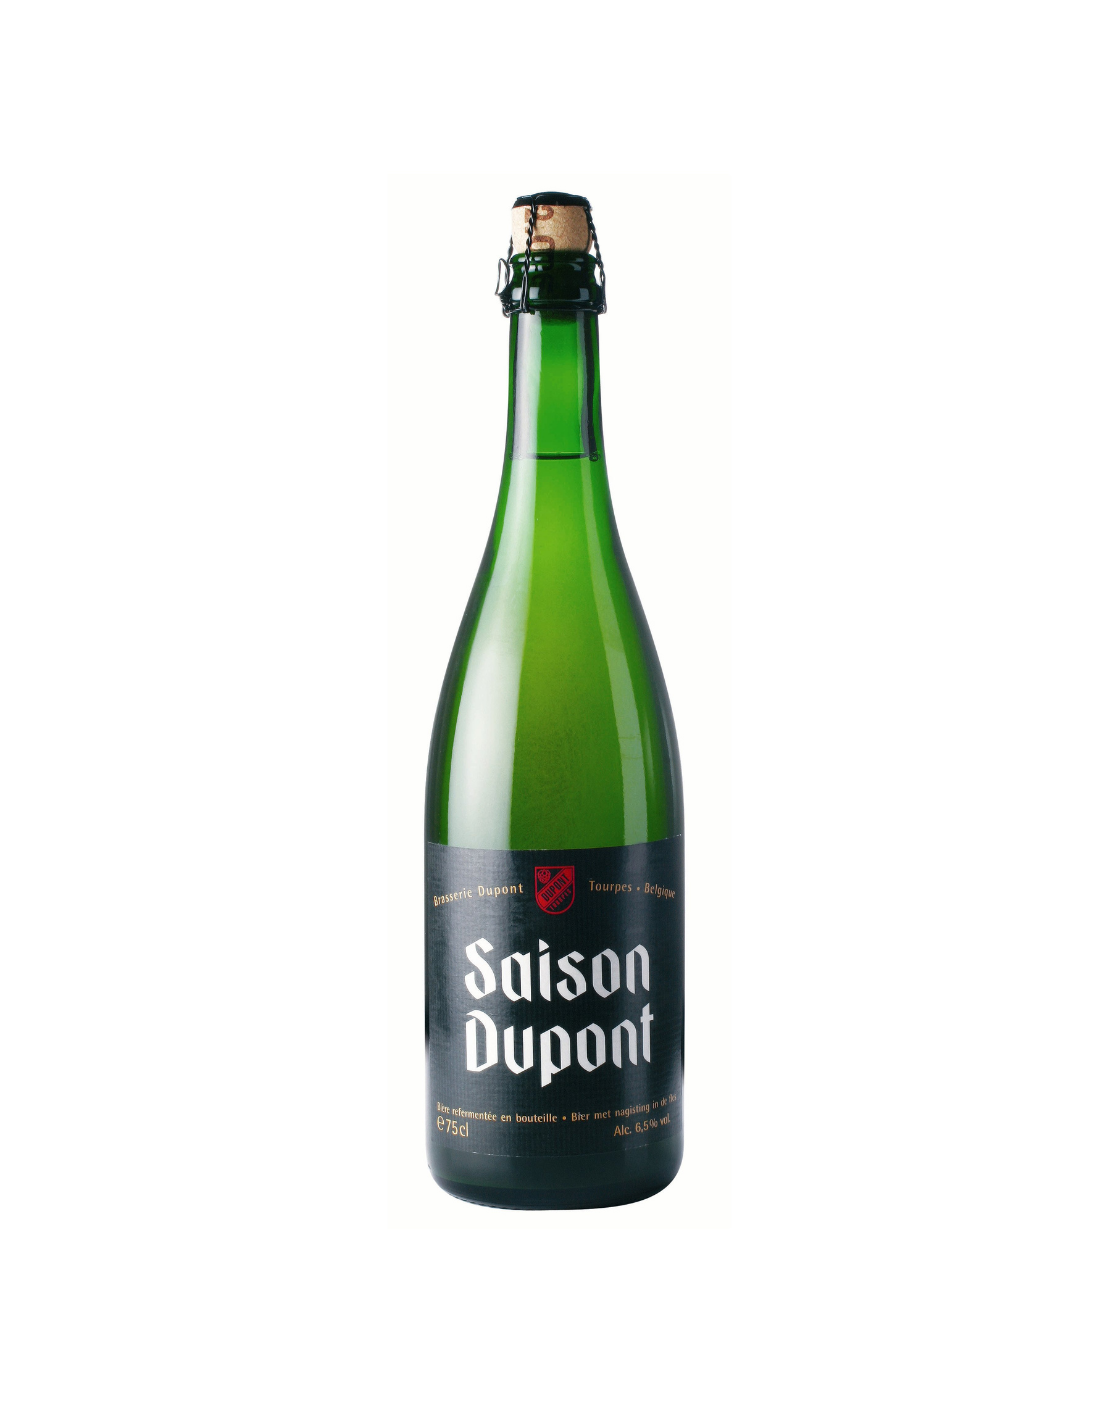 Bere blonda Saison Dupont, 6.5% alc., 0.75L, sticla, Belgia alcooldiscount.ro